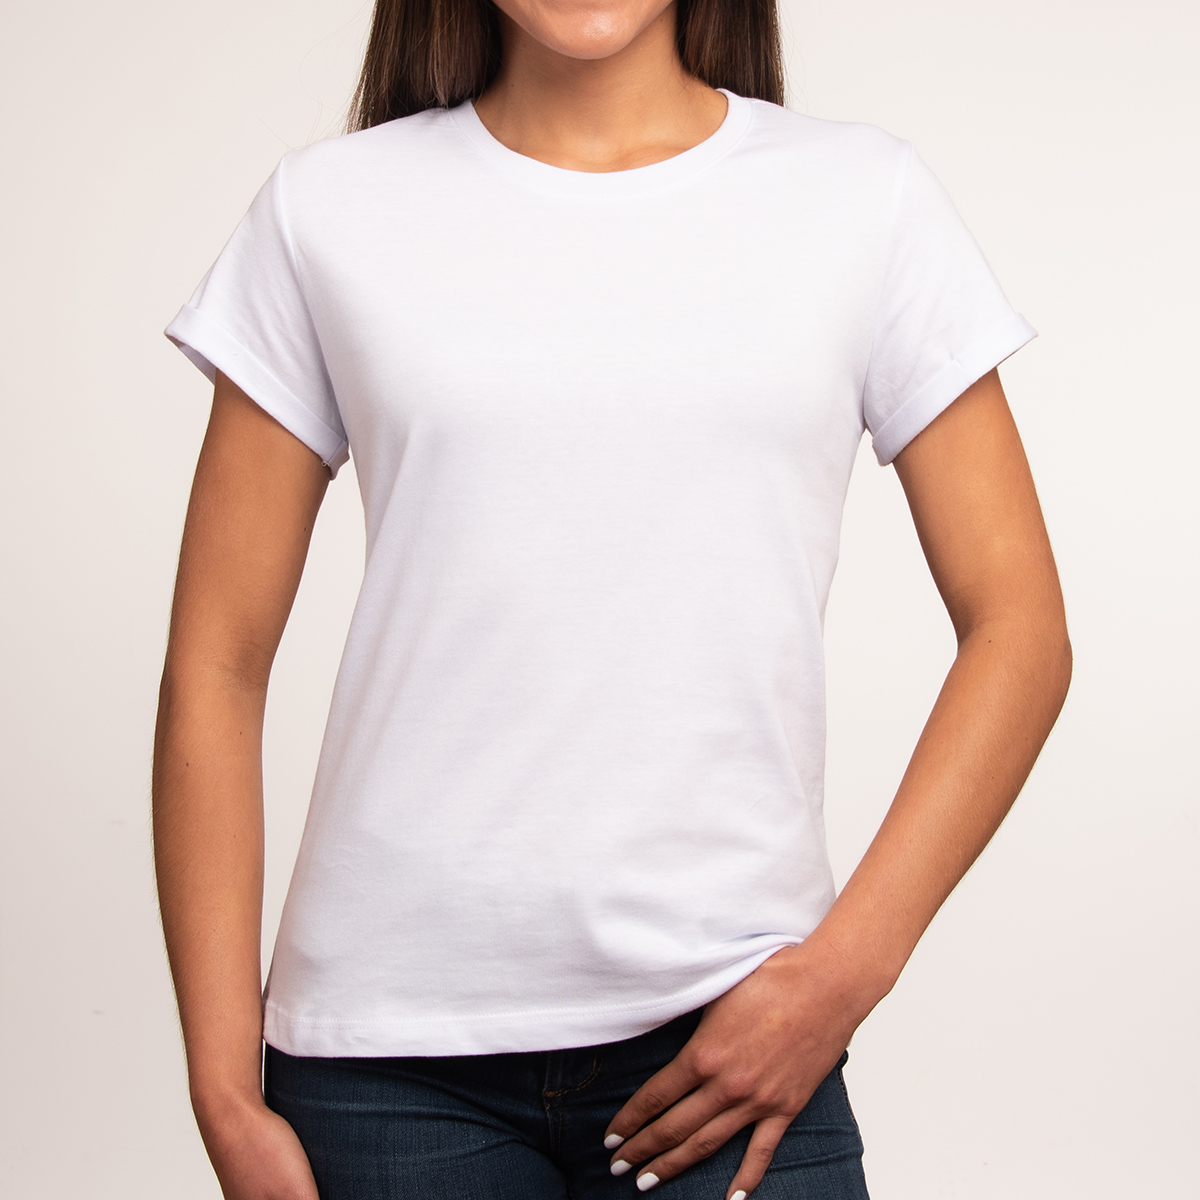 Camiseta con frase blanca mujer all in navy blue wisdowscript